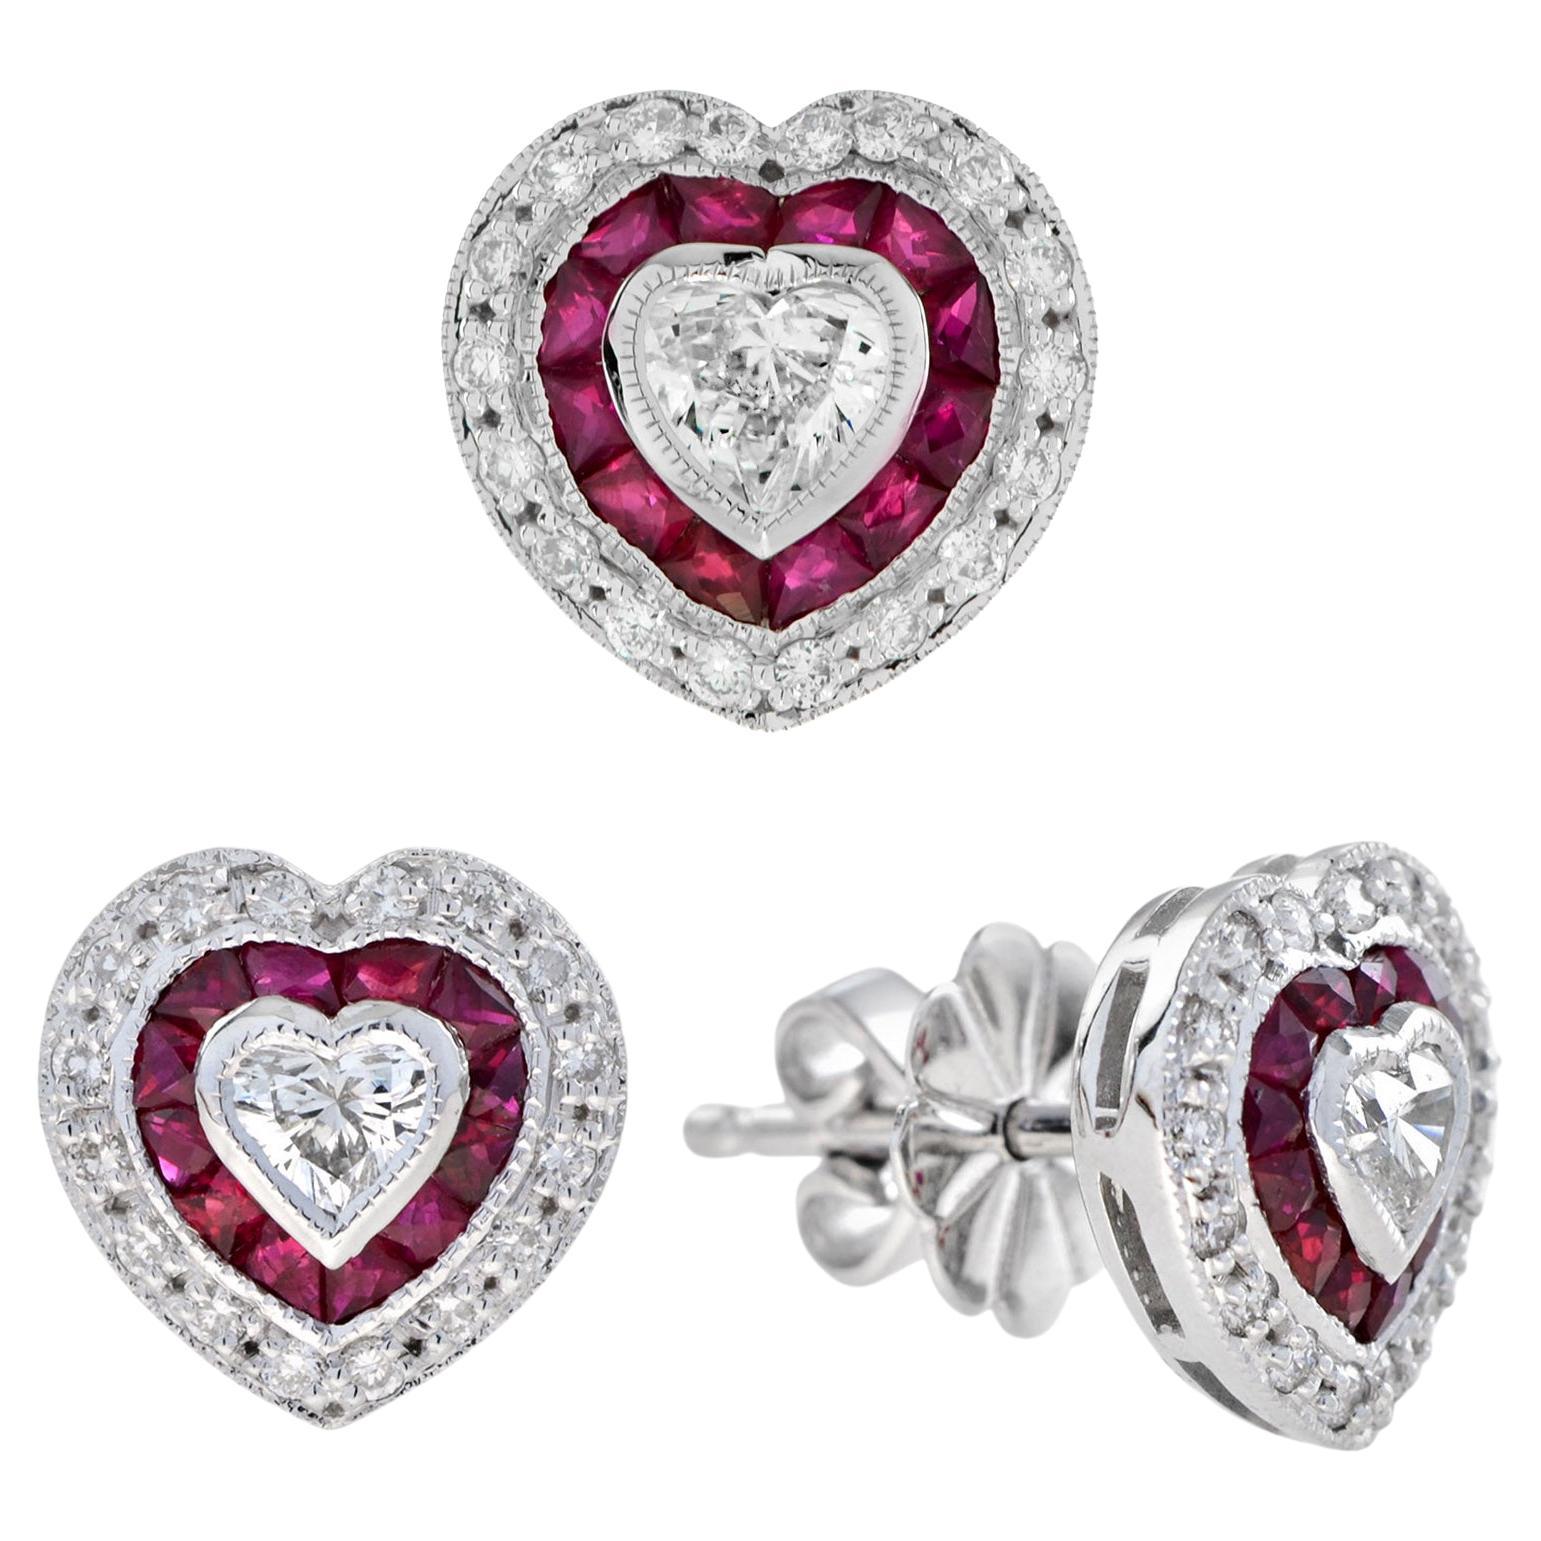 Heart Shaped Diamond and Ruby Art Deco Style Earrings Pendant Set